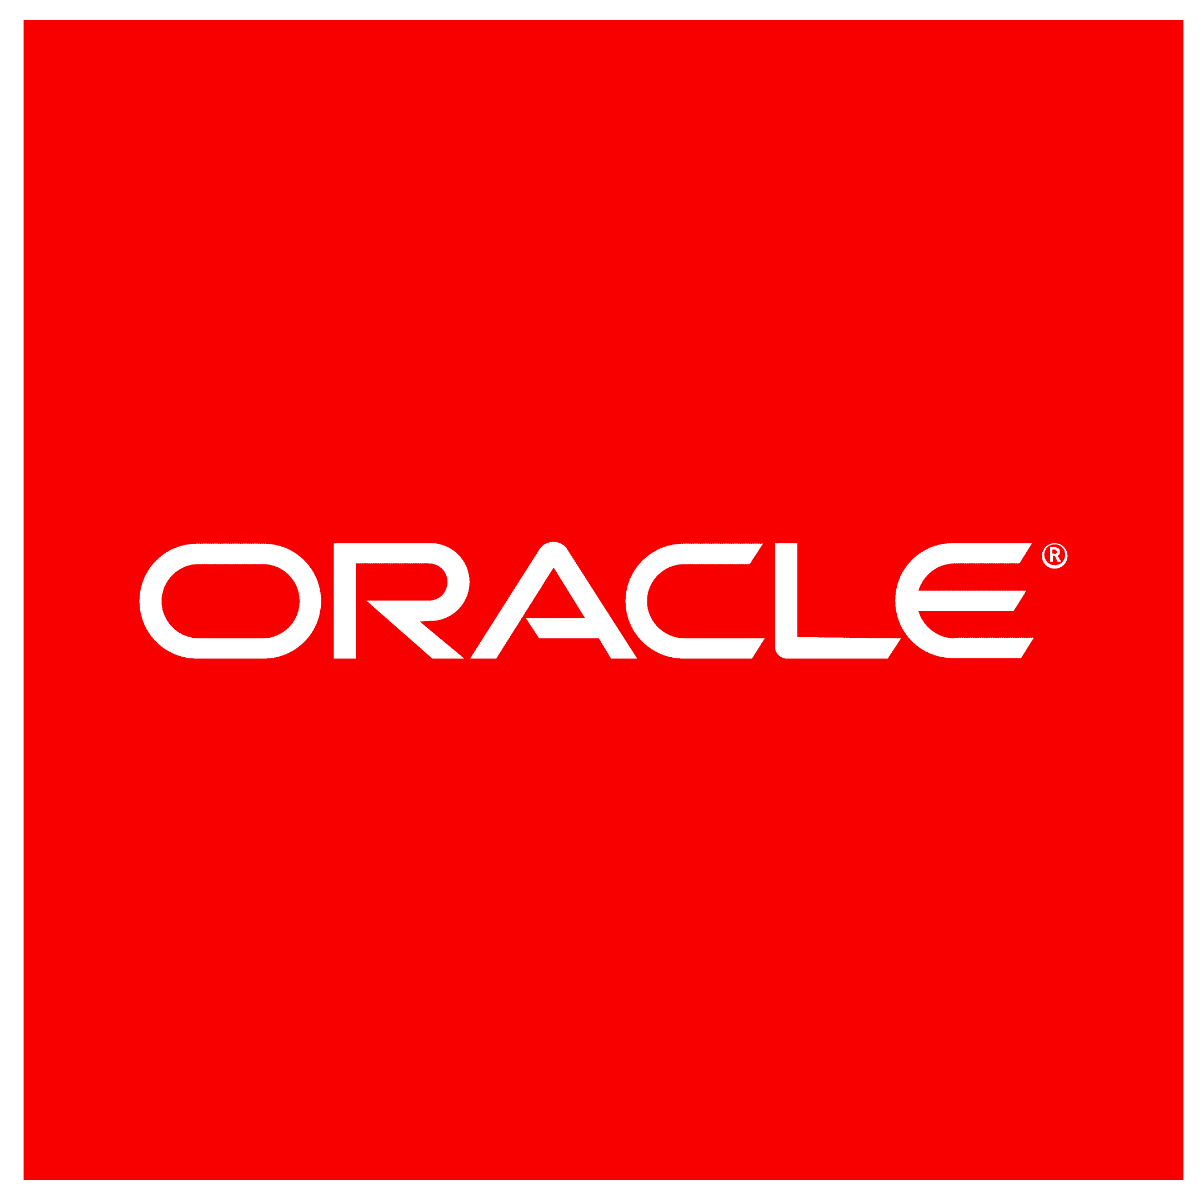 Oracle emblema